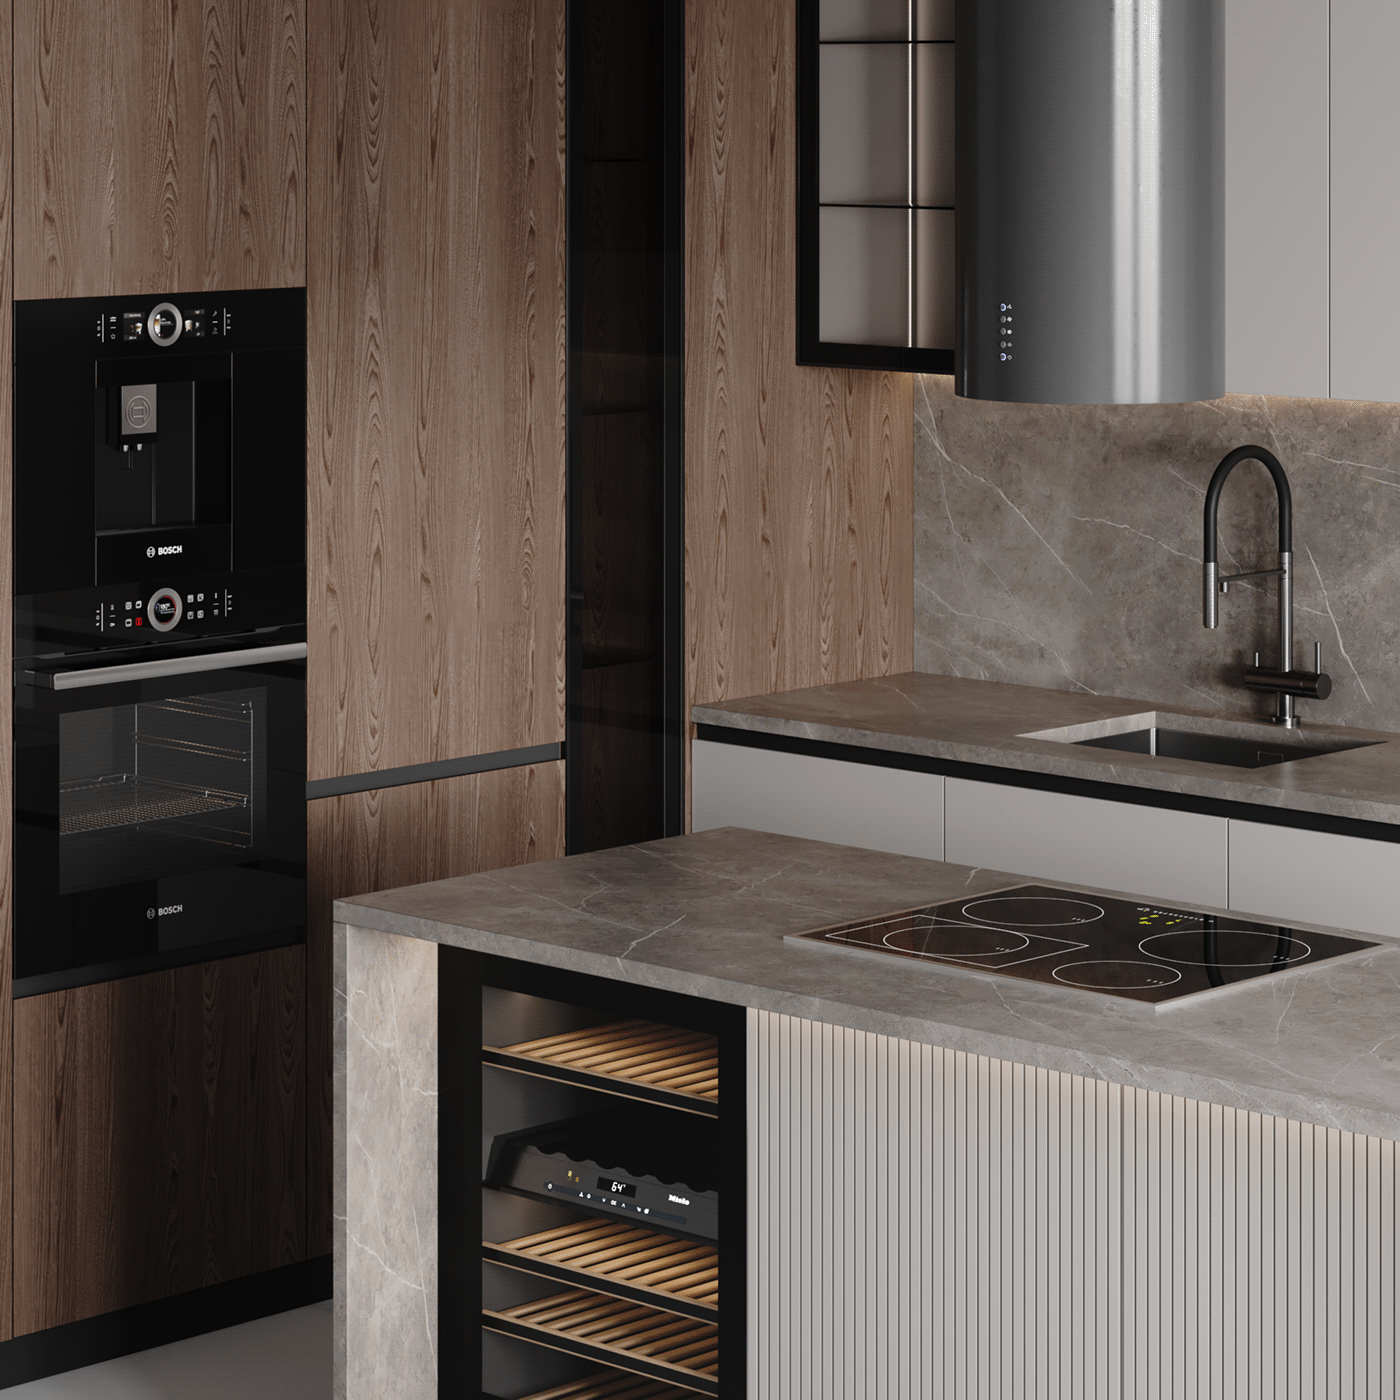 3d modeling corona kitchen kitchen design Render archviz Interior modern kitchen visualization